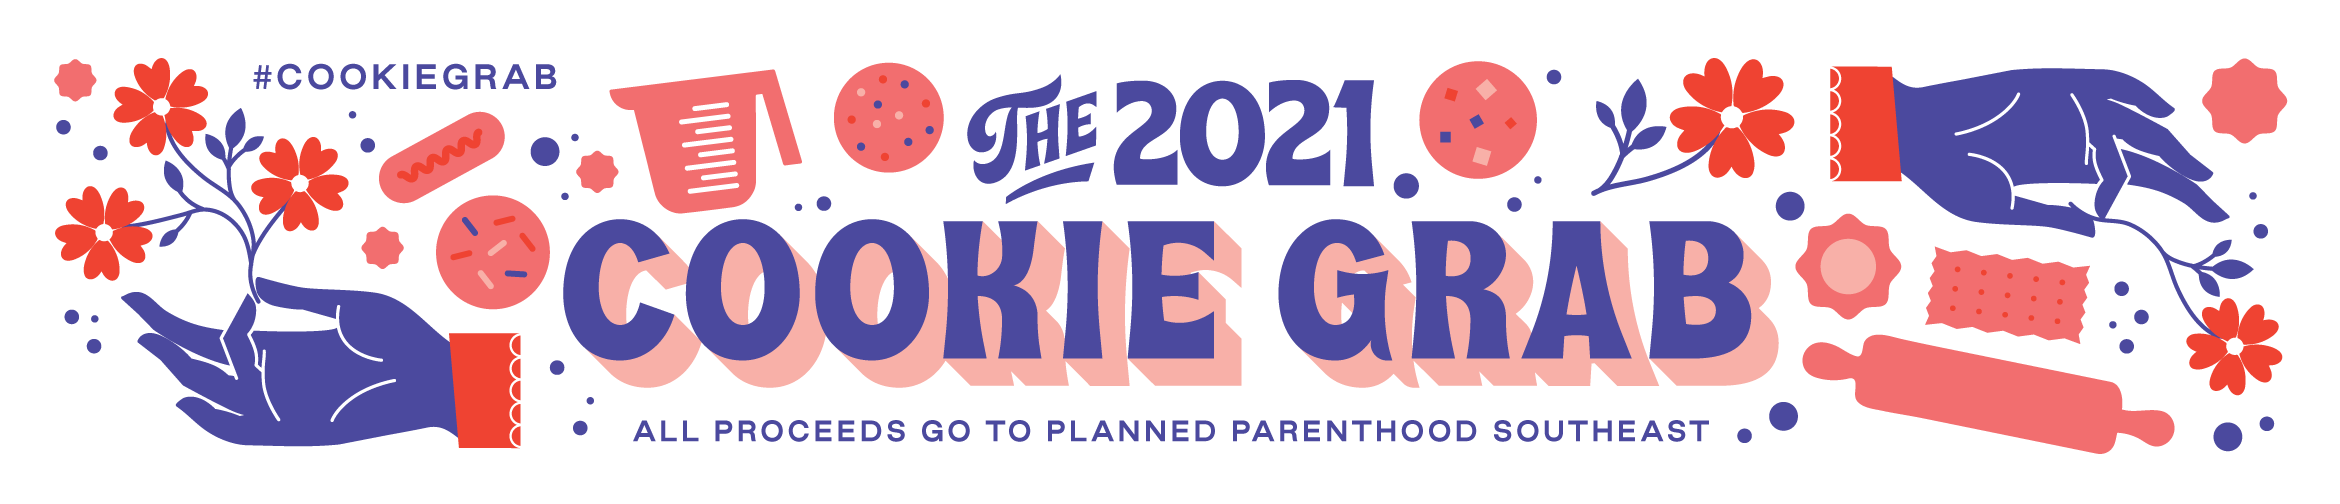 Cookie Grab 2021 Campaign